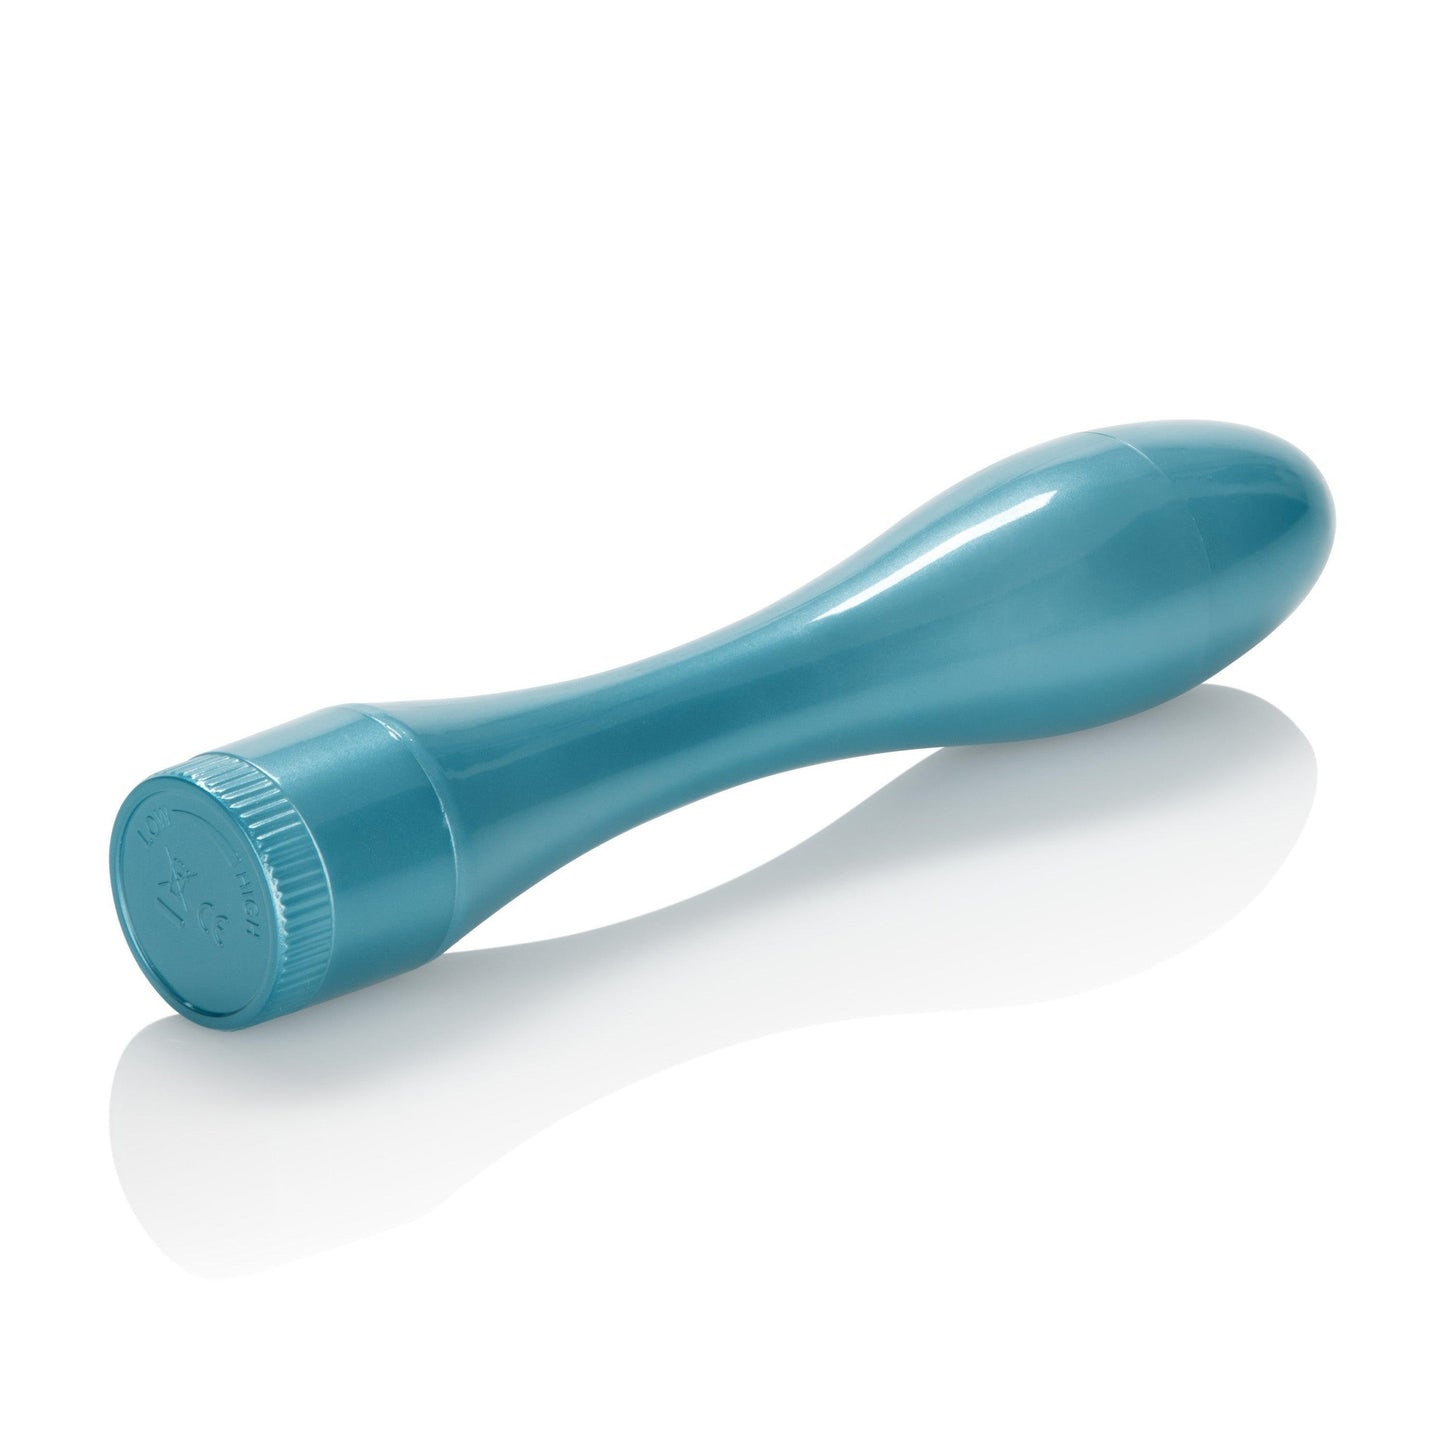 Teardrop Probe - Blue - My Sex Toy Hub